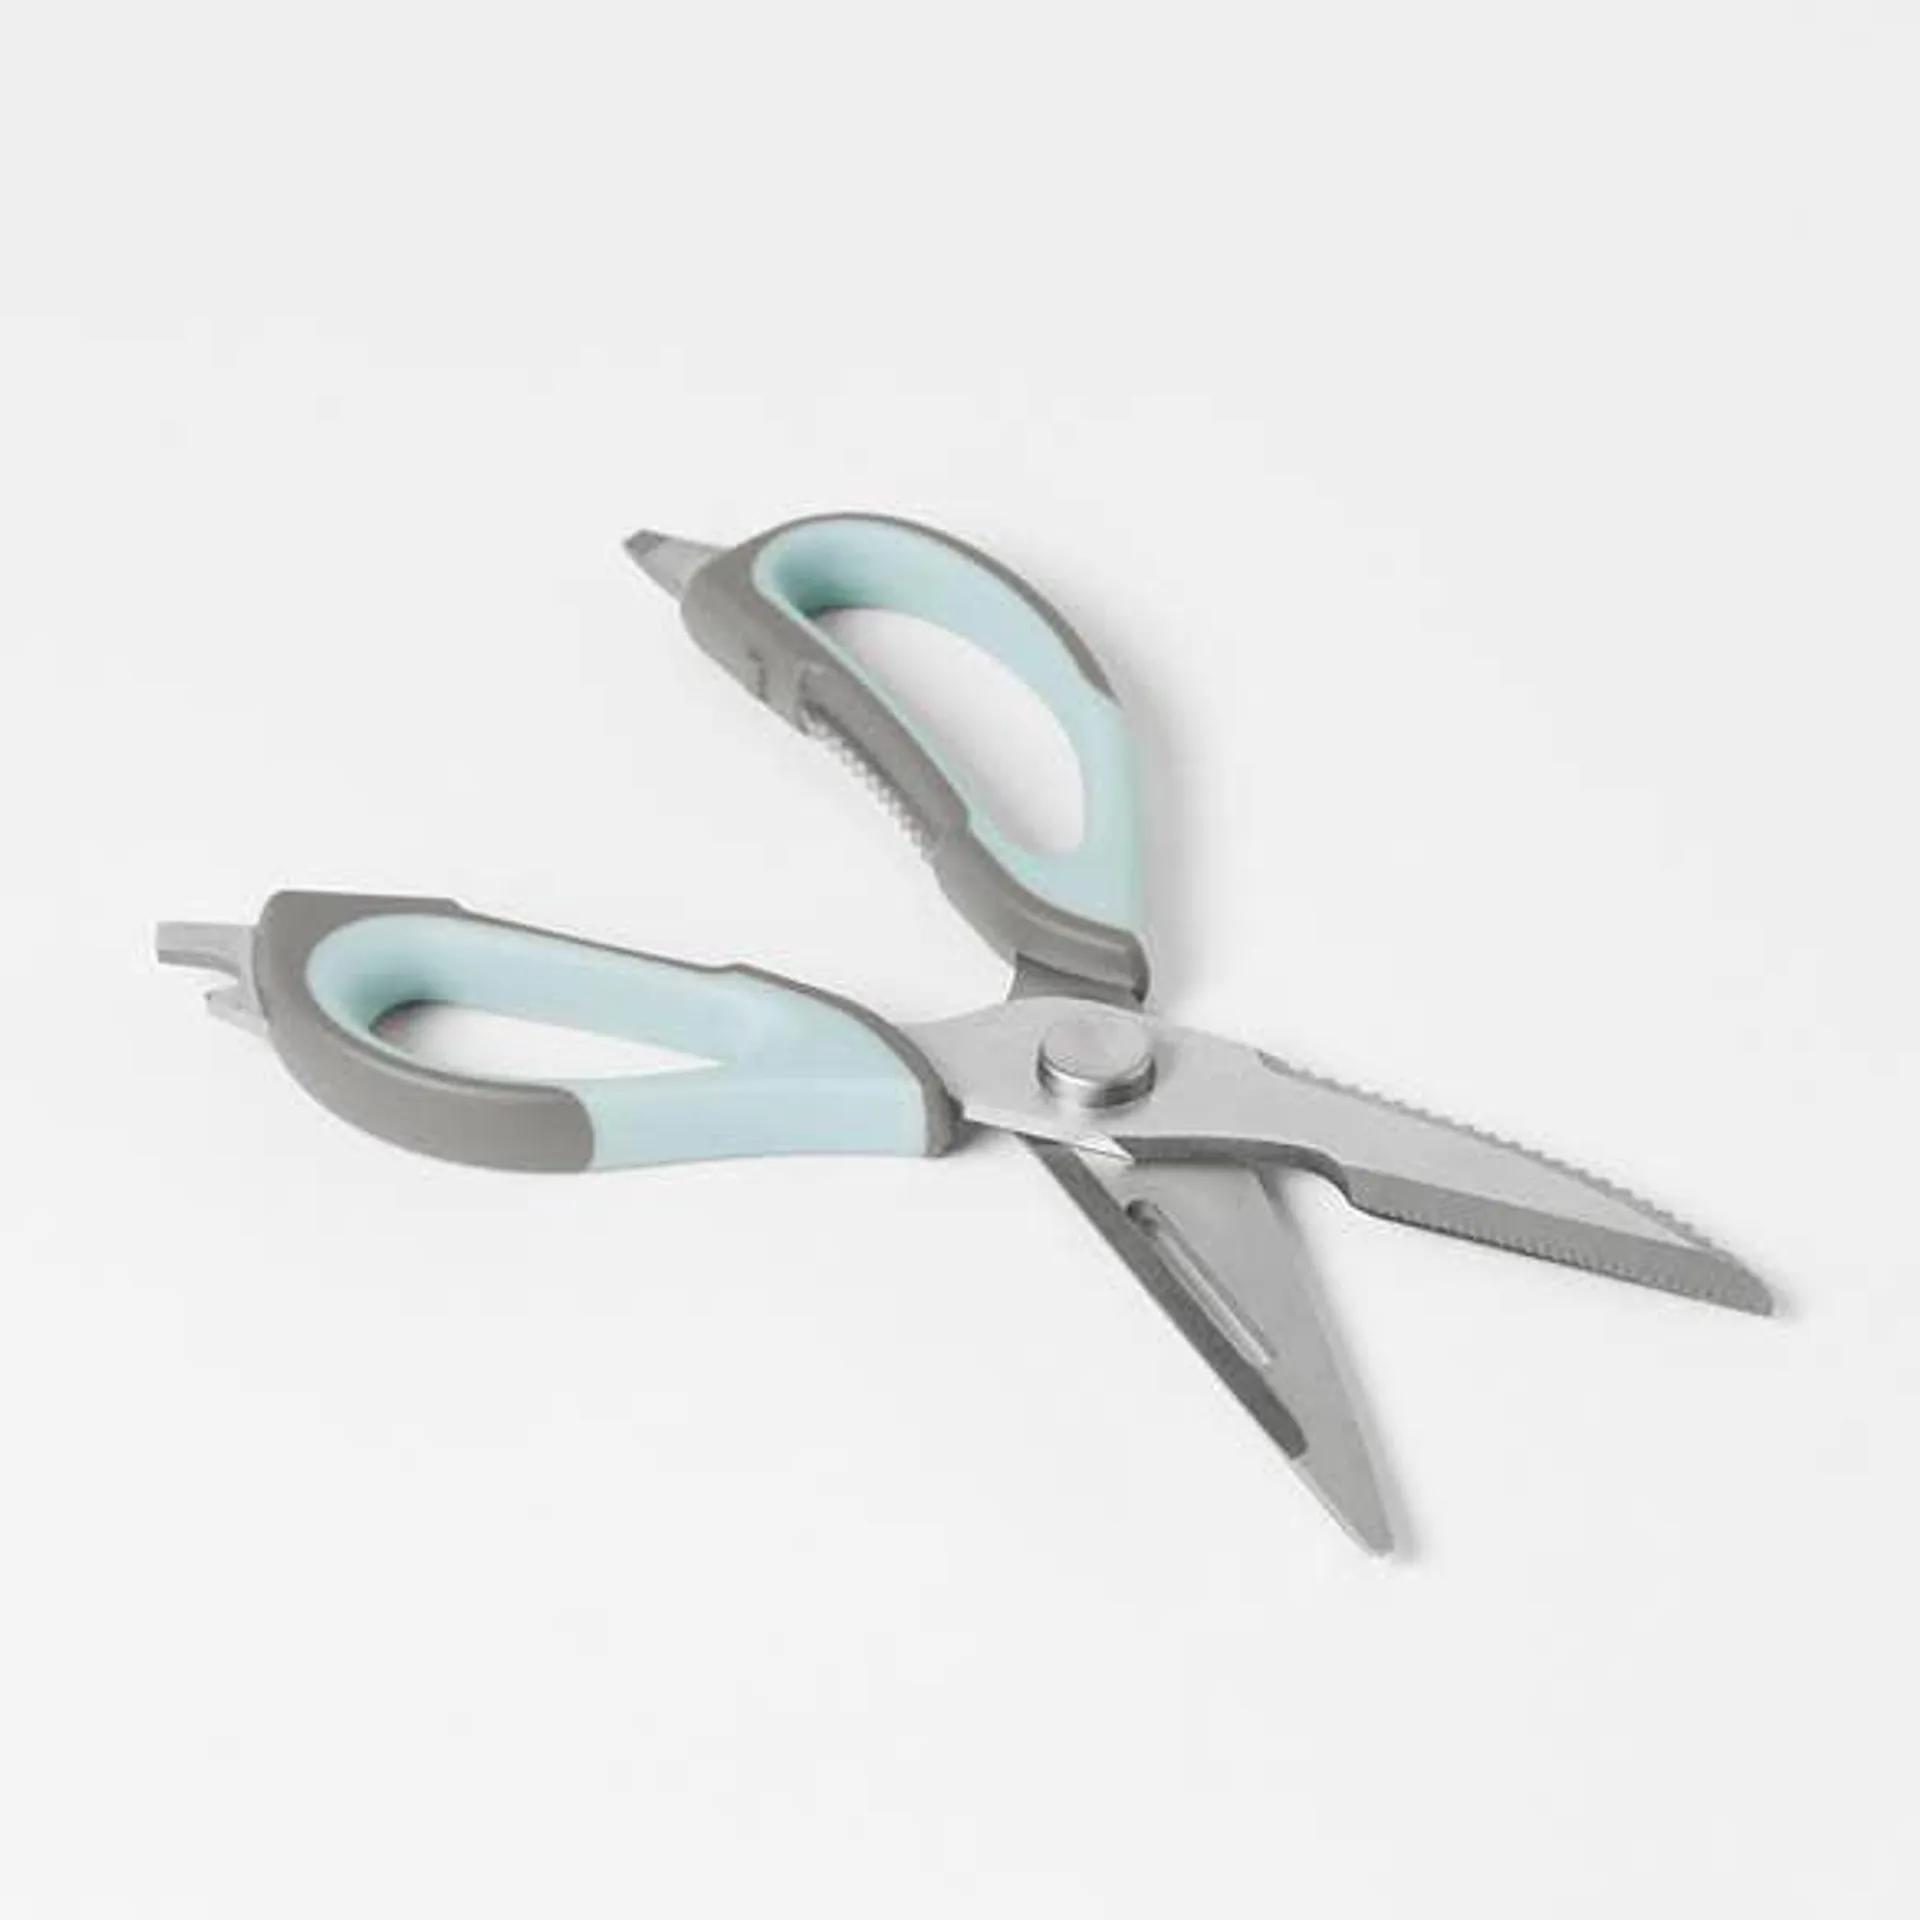 Multi Functional Kitchen Scissors